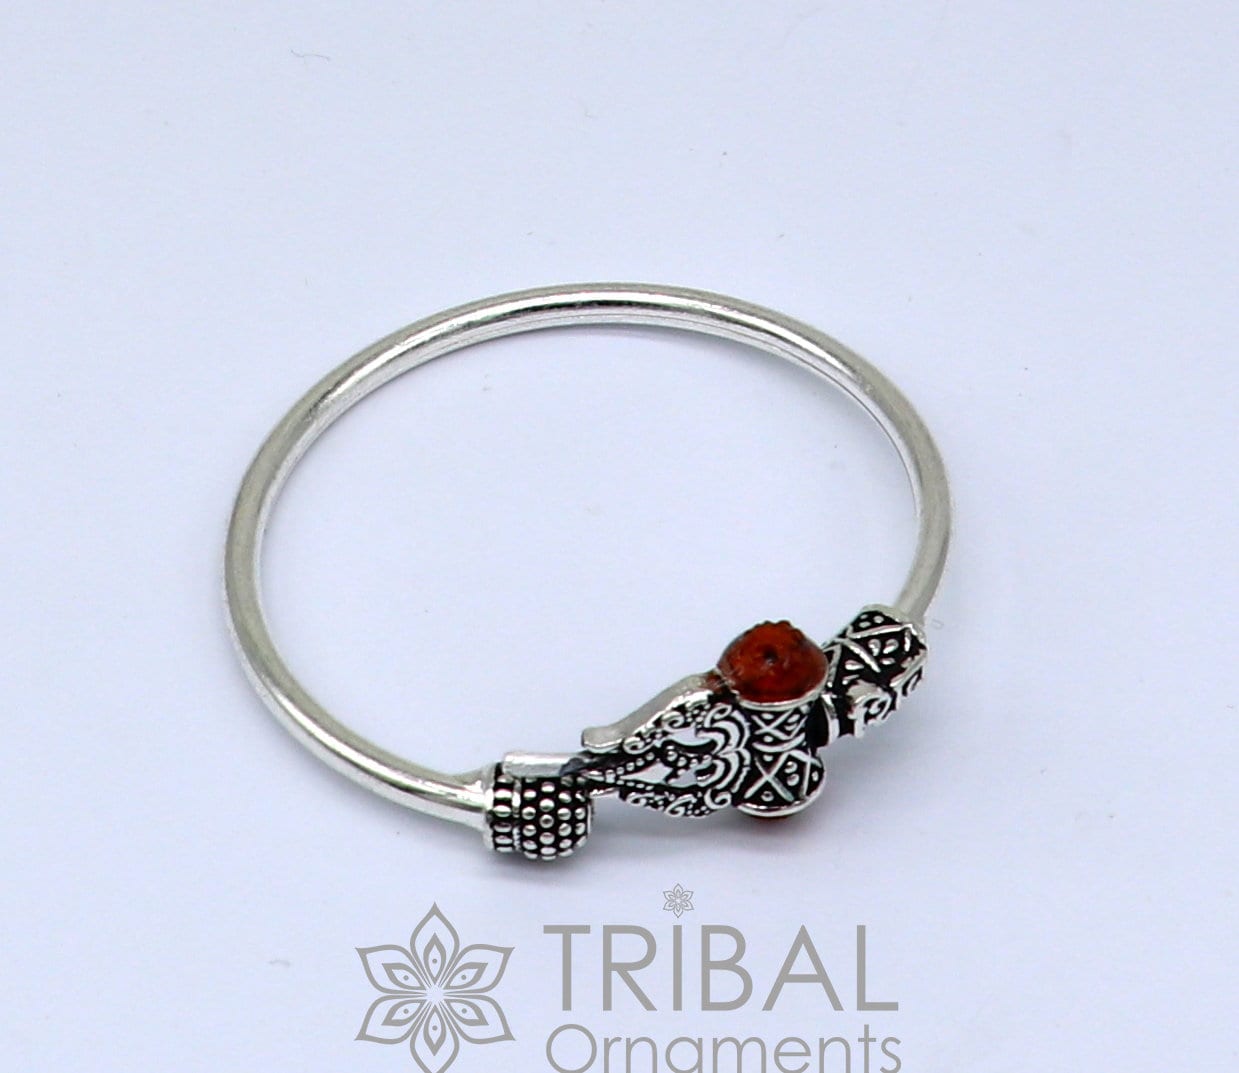 925 sterling silver Handmade gorgeous Lord shiva trident baby bangle bracelet kada, amazing Shiv kada unisex bracelet tribal jewelry nsk682 - TRIBAL ORNAMENTS